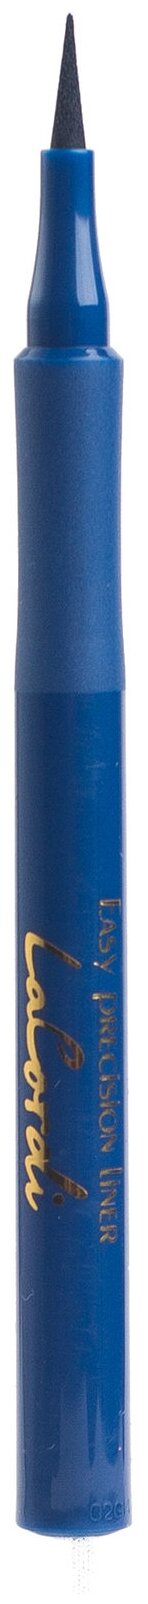 LaCordi Подводка-фломастер для глаз Easy Precision Liner, оттенок синий